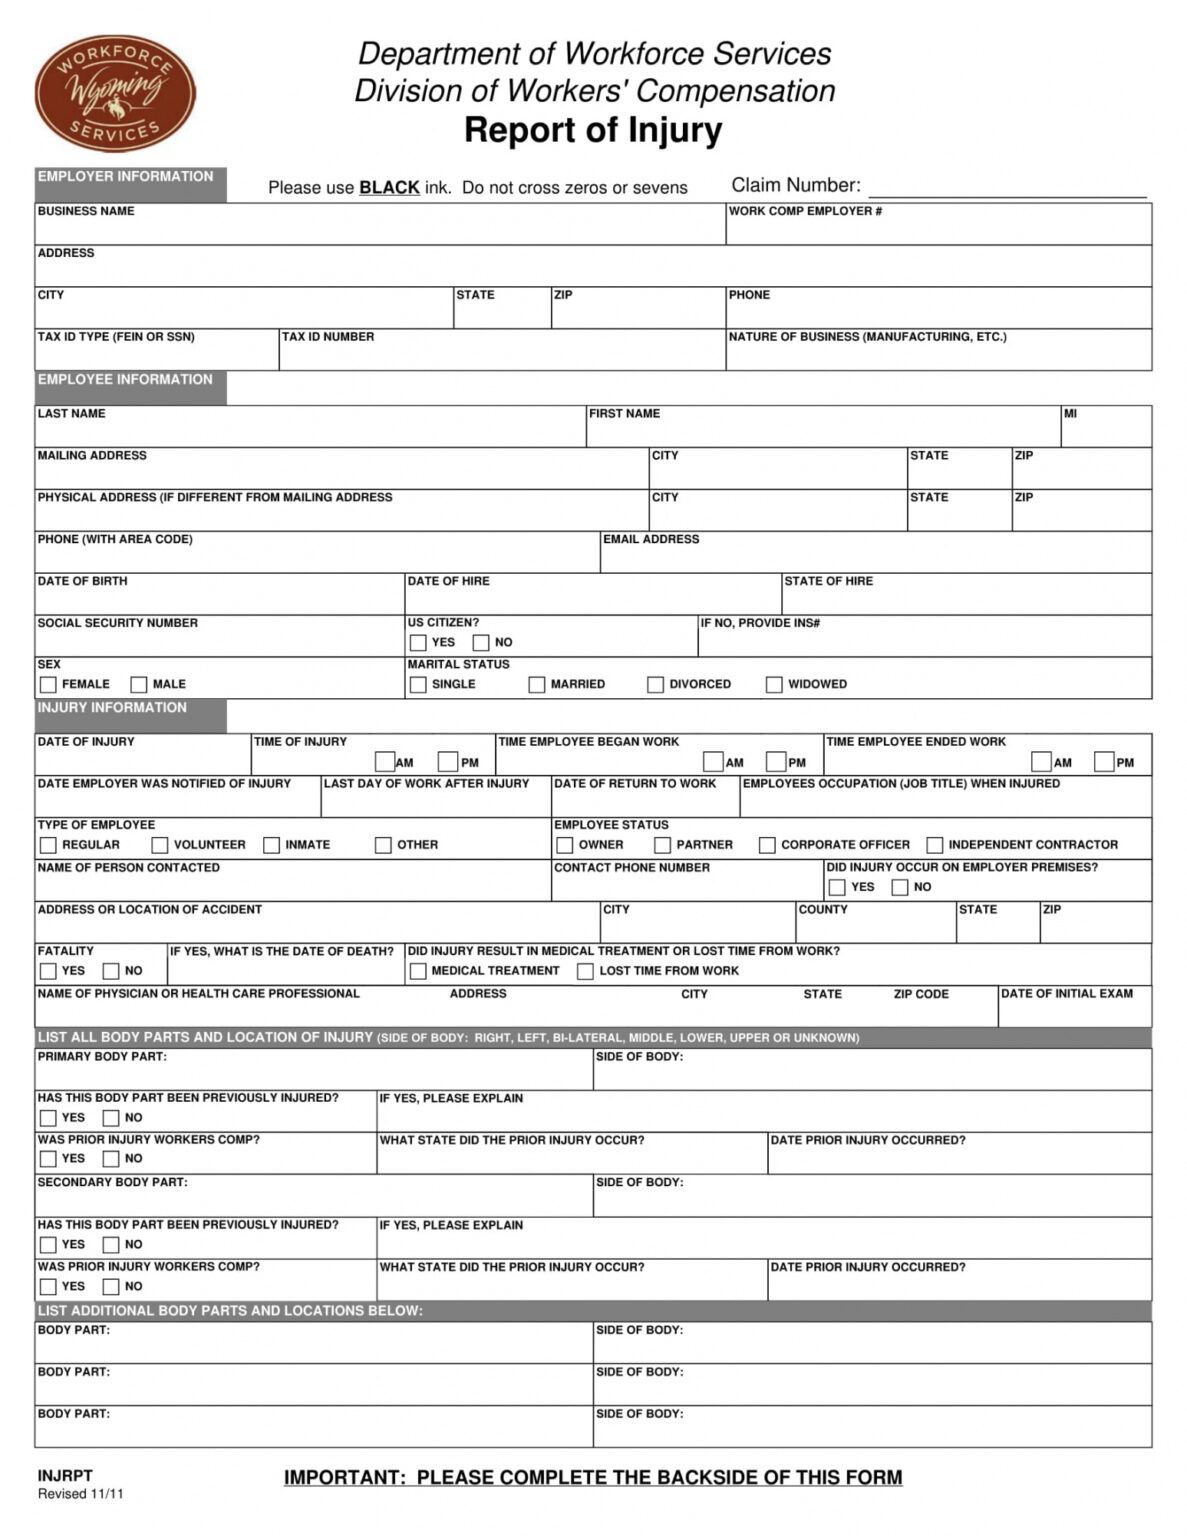 costum-osha-incident-report-form-template-doc-example-minasinternational